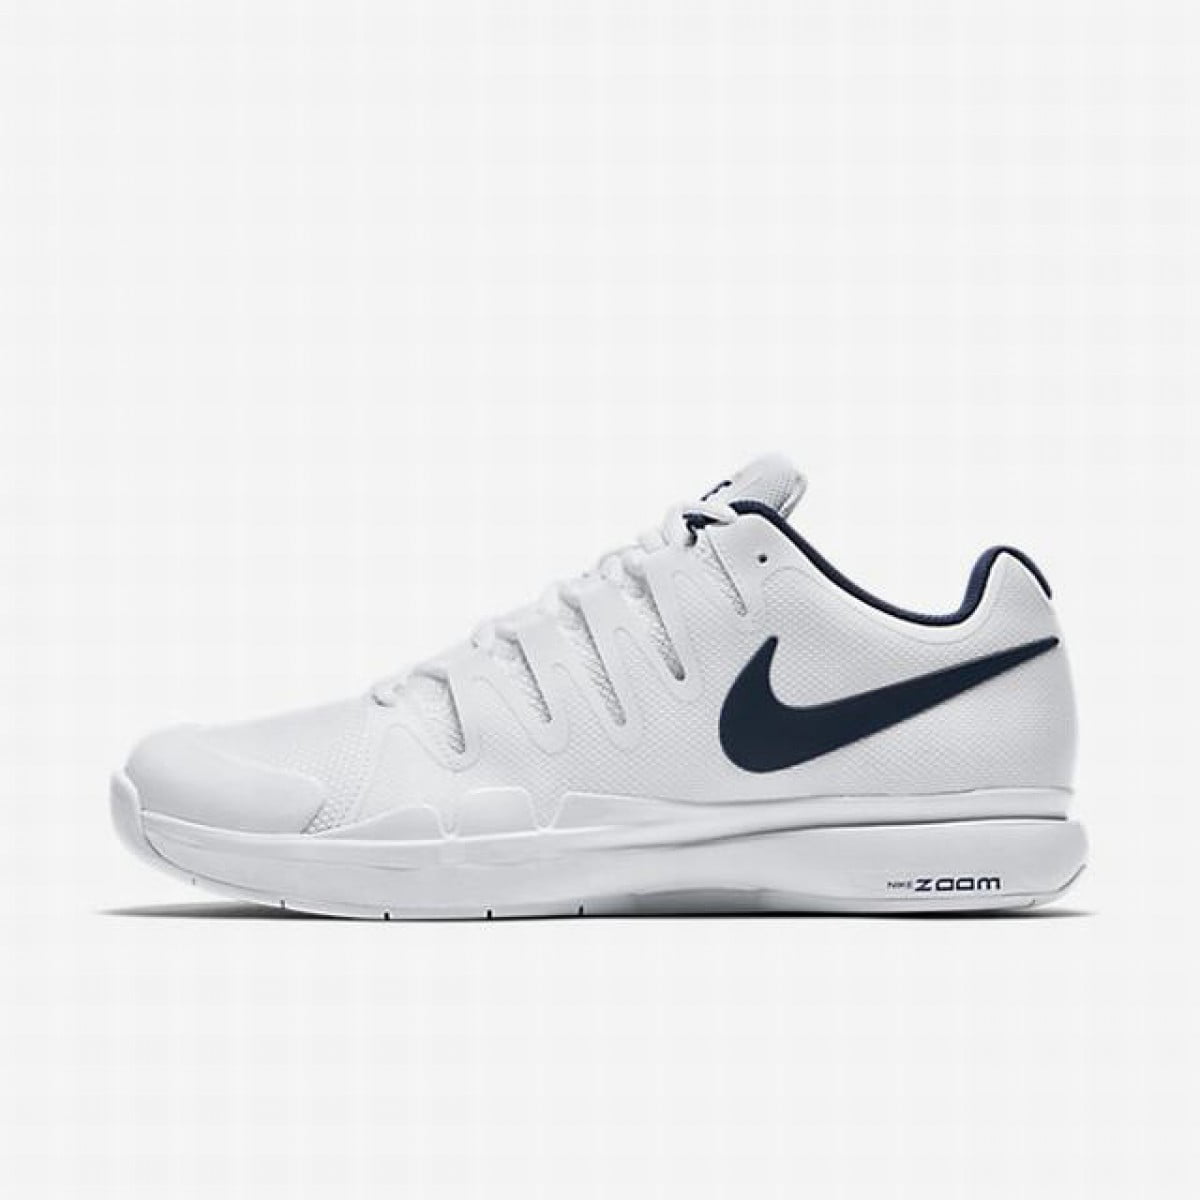 Charlotte Bronte Atticus picar Nike Men's Zoom Vapor 9.5 Tour Tennis Shoes, White/Binary Blue, 6 D US -  Walmart.com